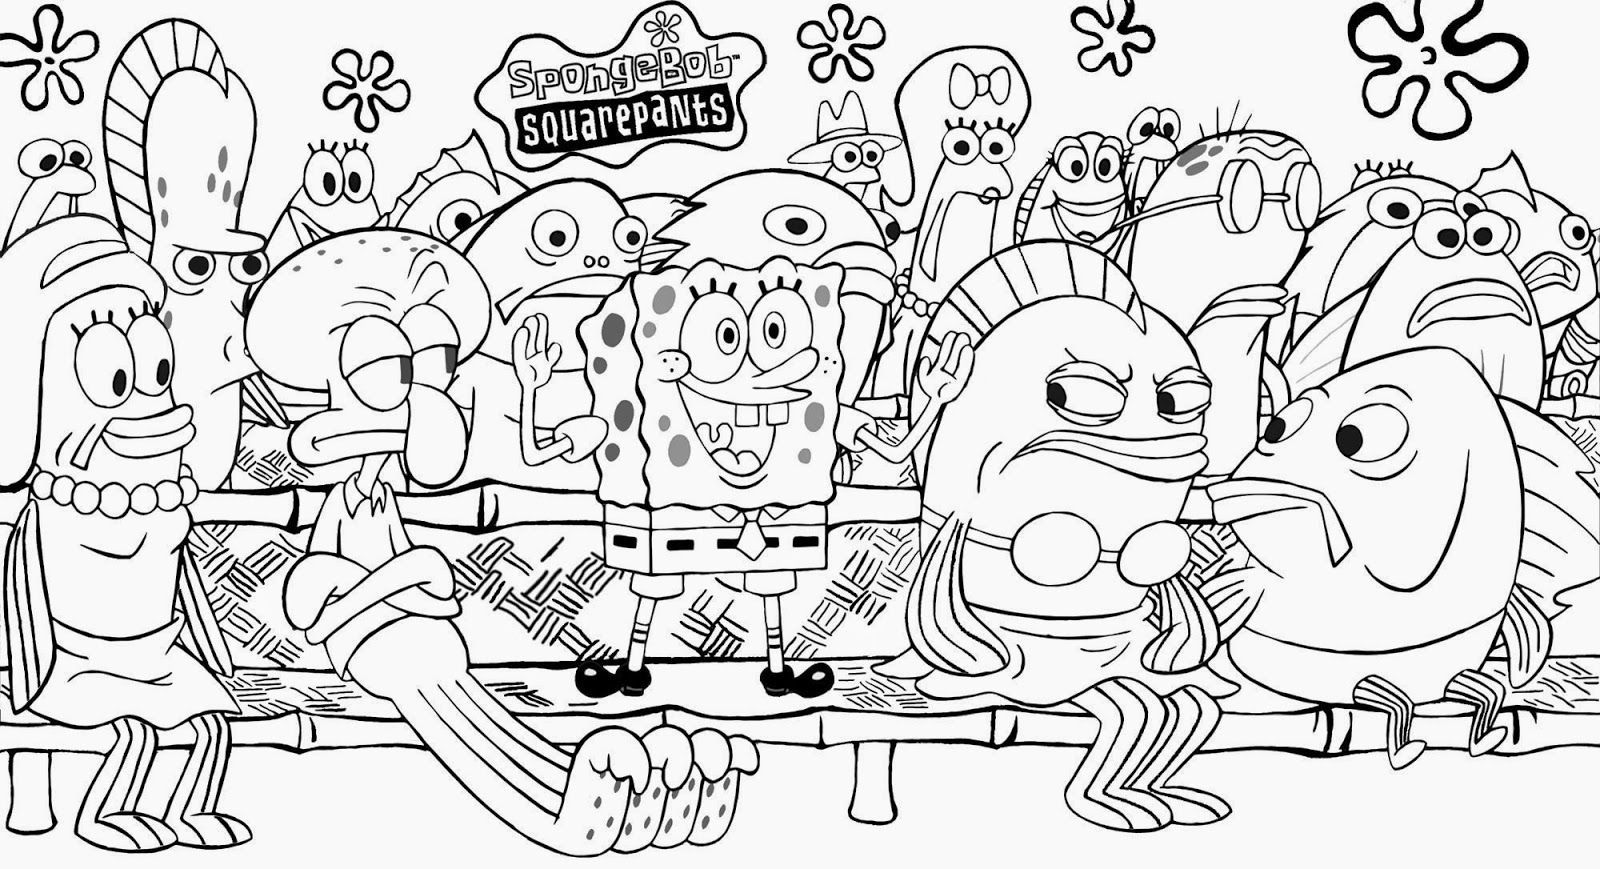 Spongebob Squarepants Coloring Pages | lugudvrlistscom